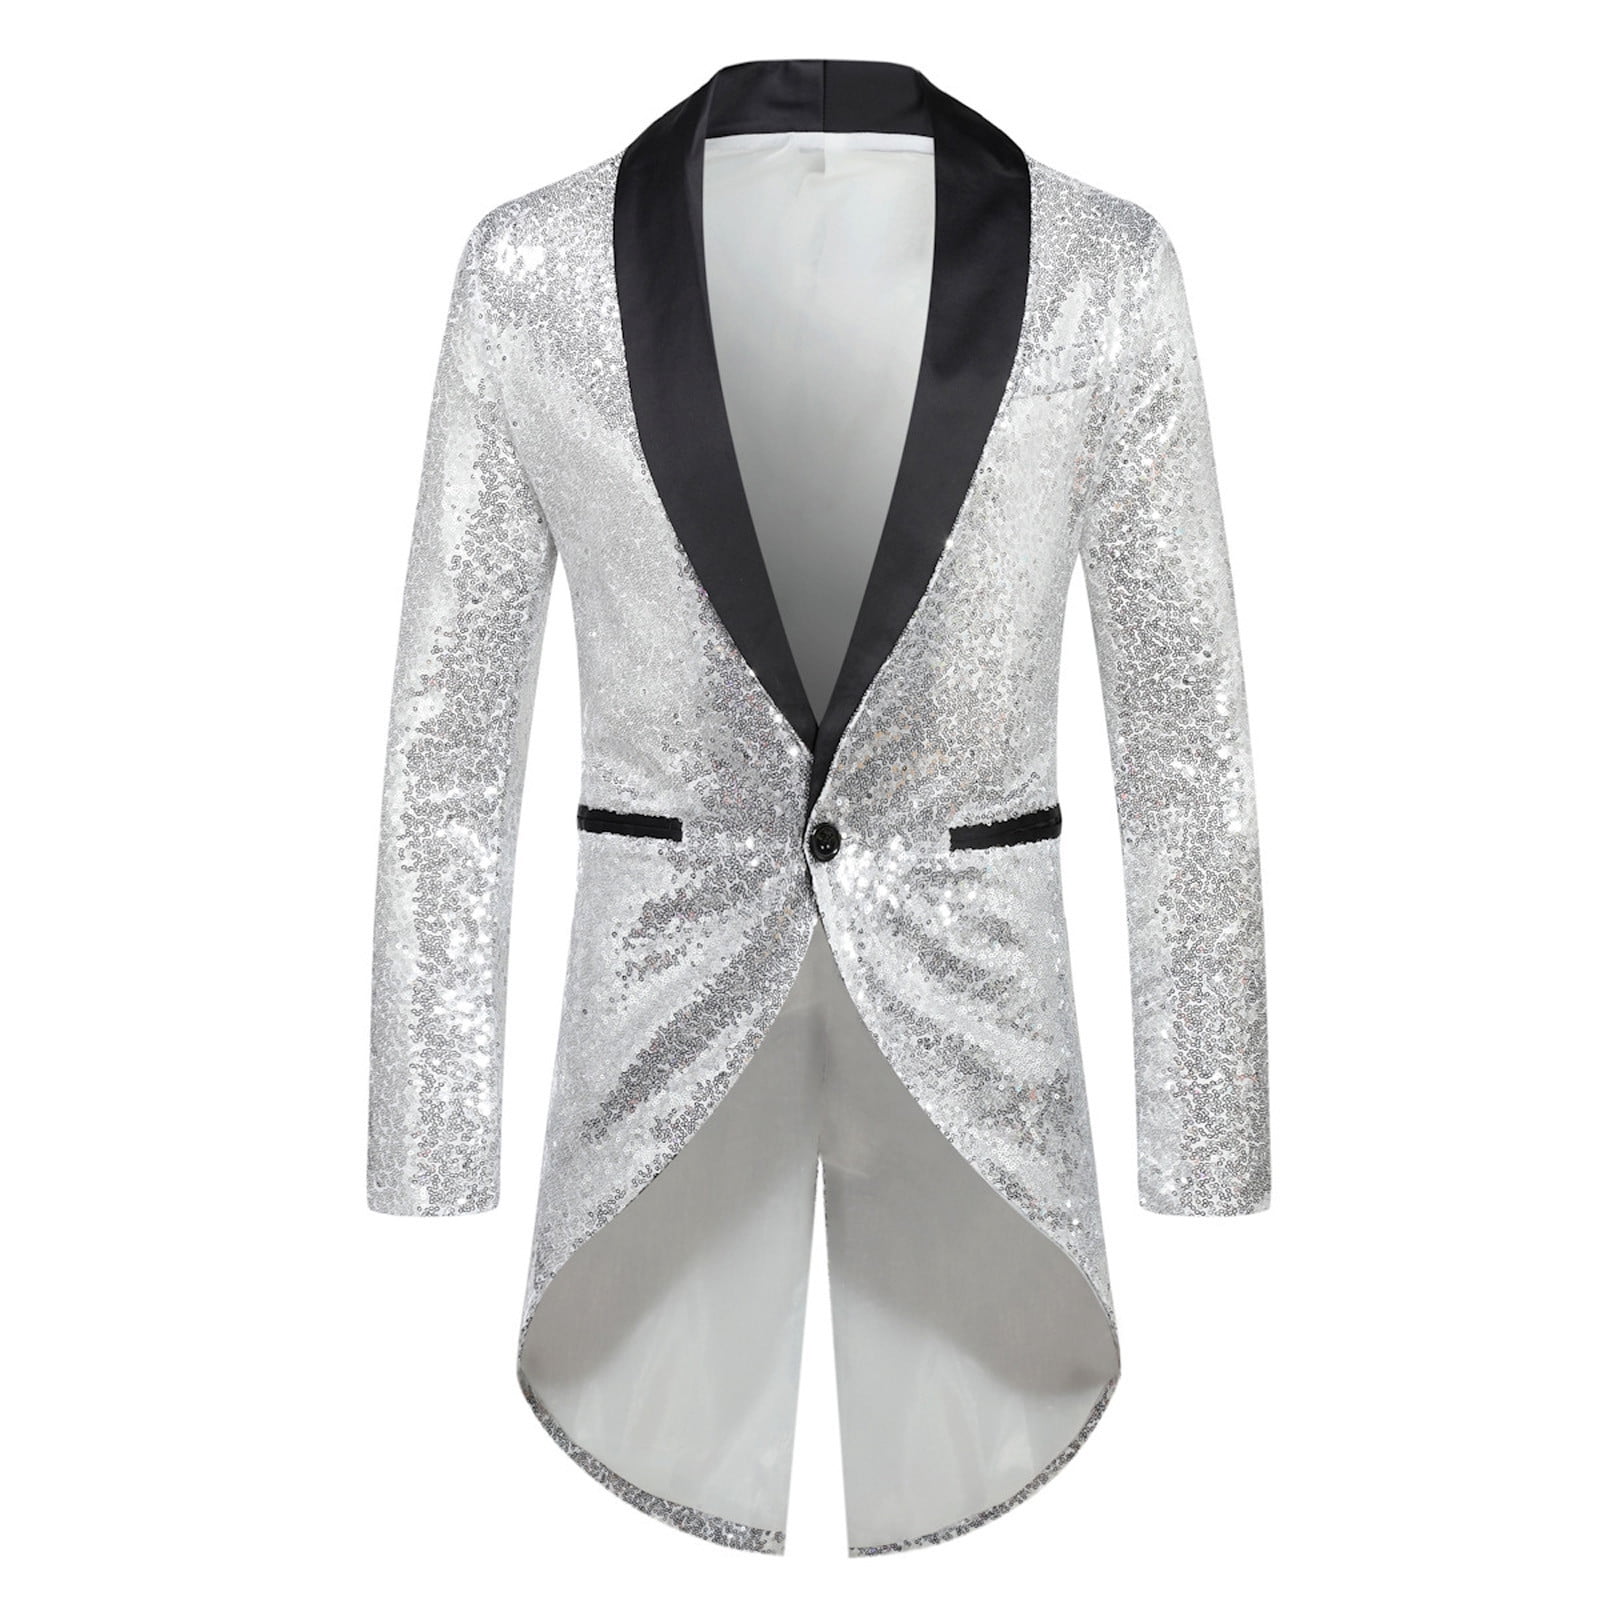 Olyvenn Winter Warm Men's Suit One Button Suit Formal Dress Performance Suit Fitted Long Sleeved Lapel Suit Blazers Formal Business Office Work Suit